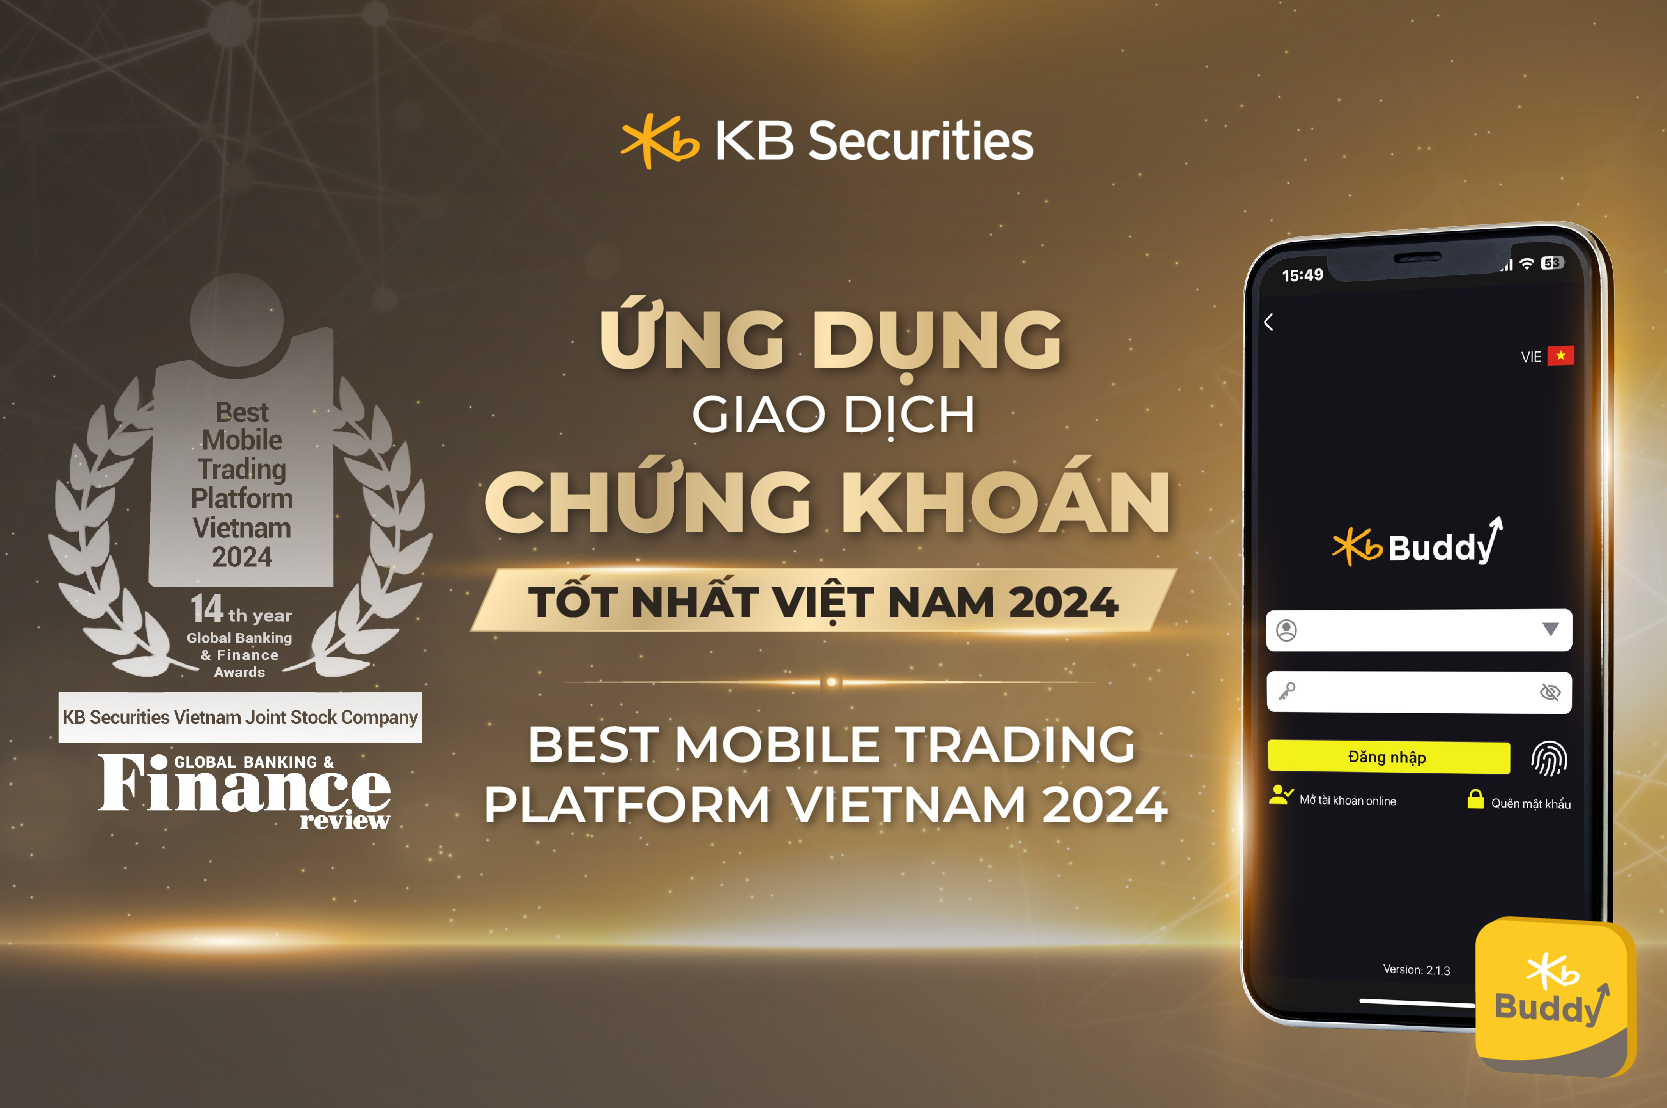 KB Buddy wins Global Banking and Finance Awards in Best Mobile Trading Platform Vietnam 2024